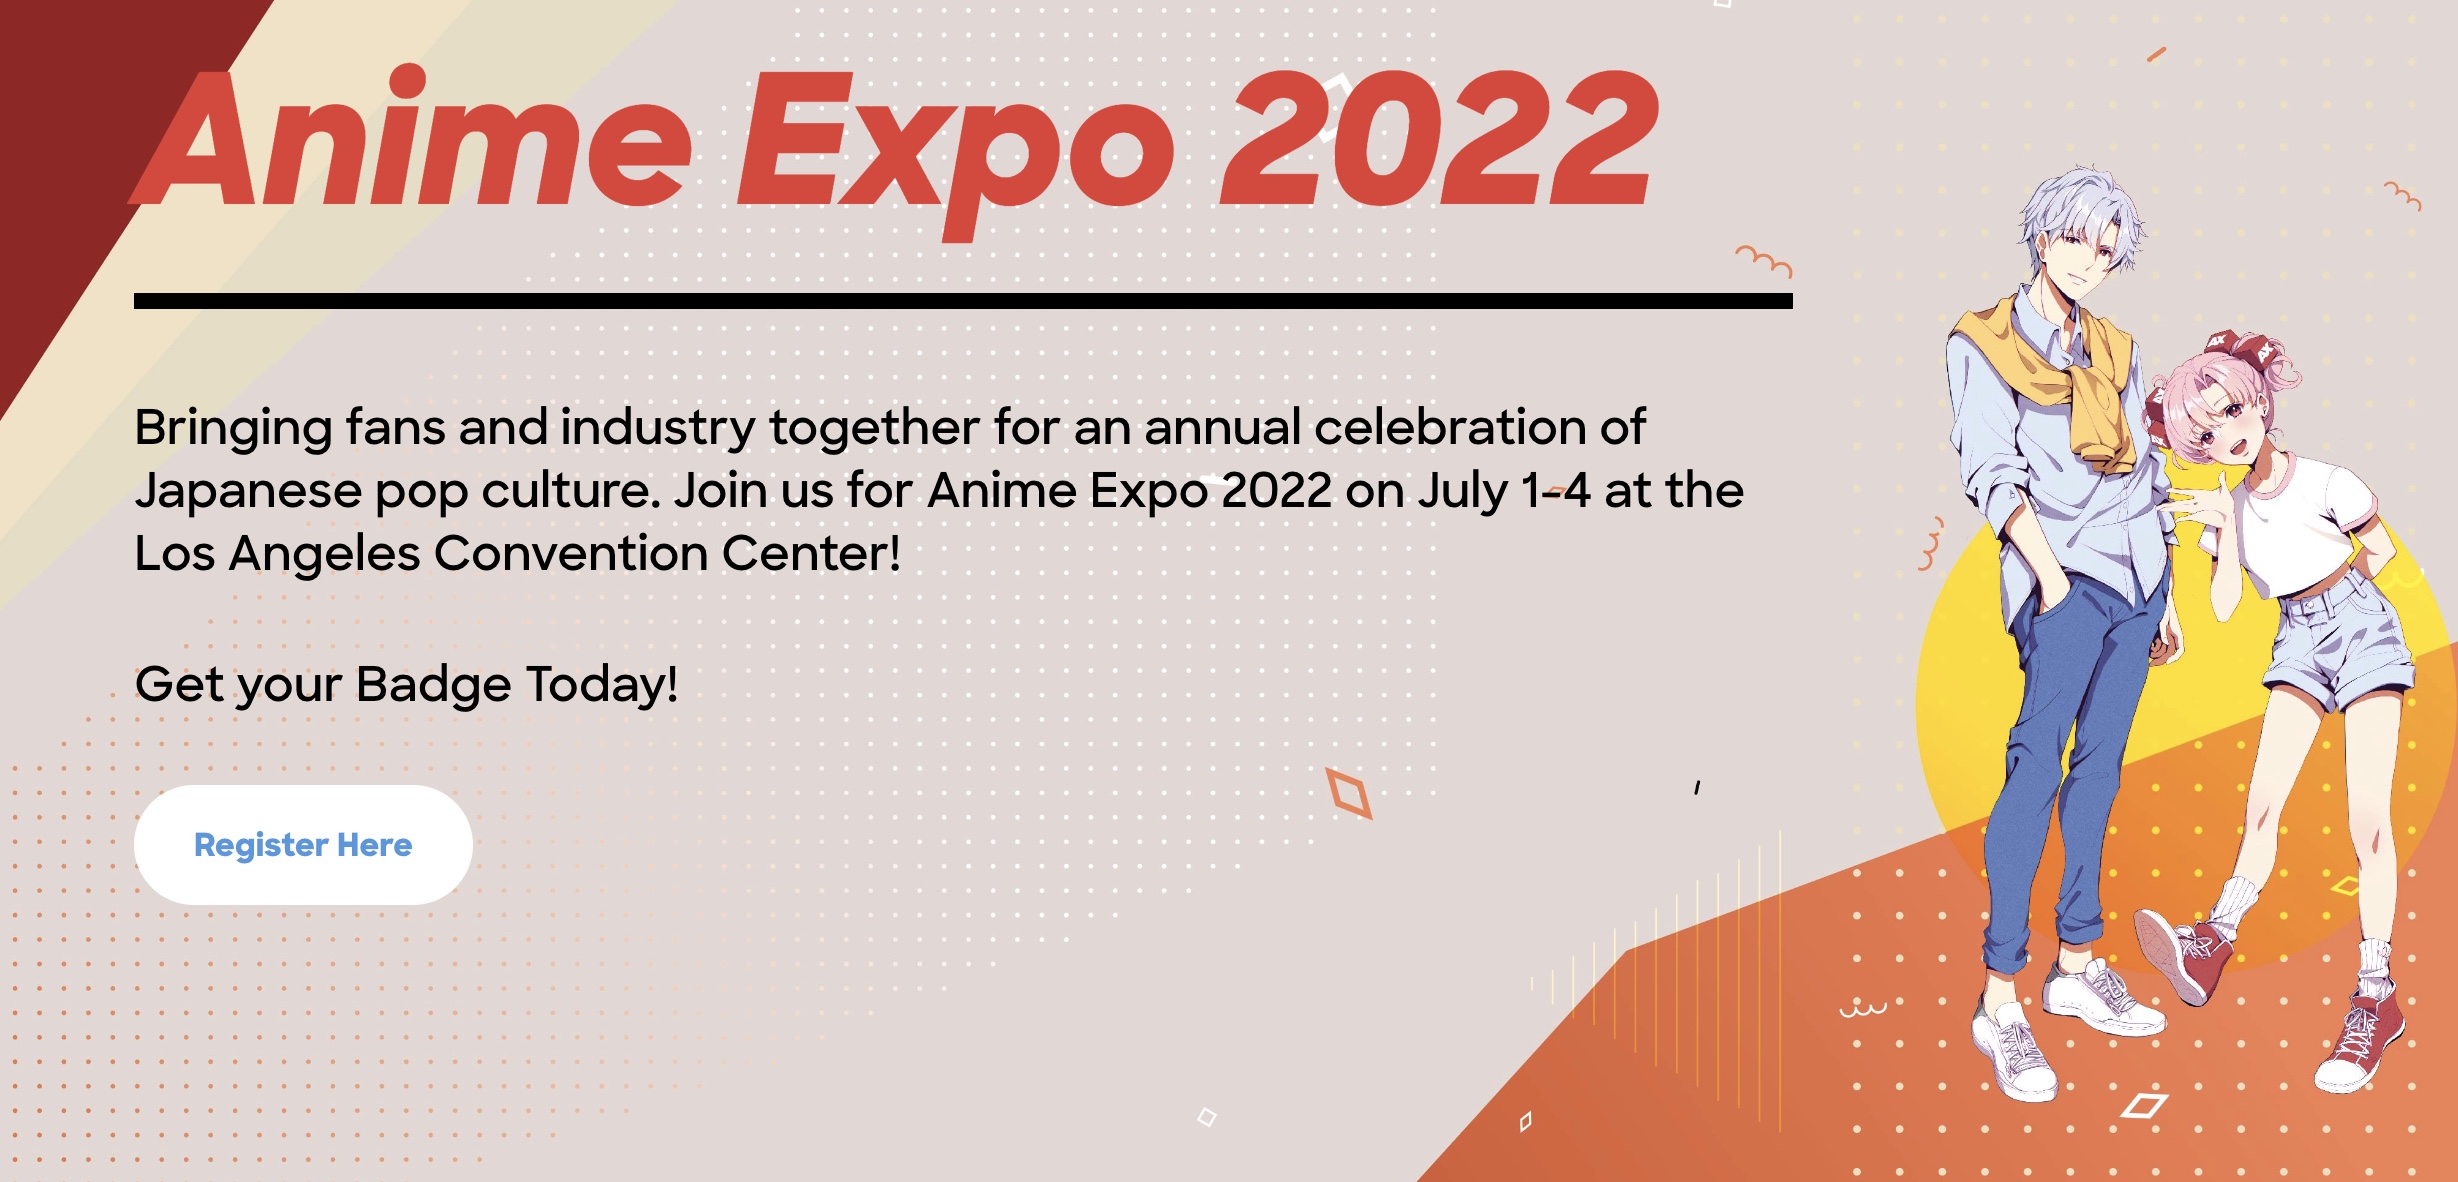 Anime Expo 2022 Perfect Guide - Japan Web Magazine